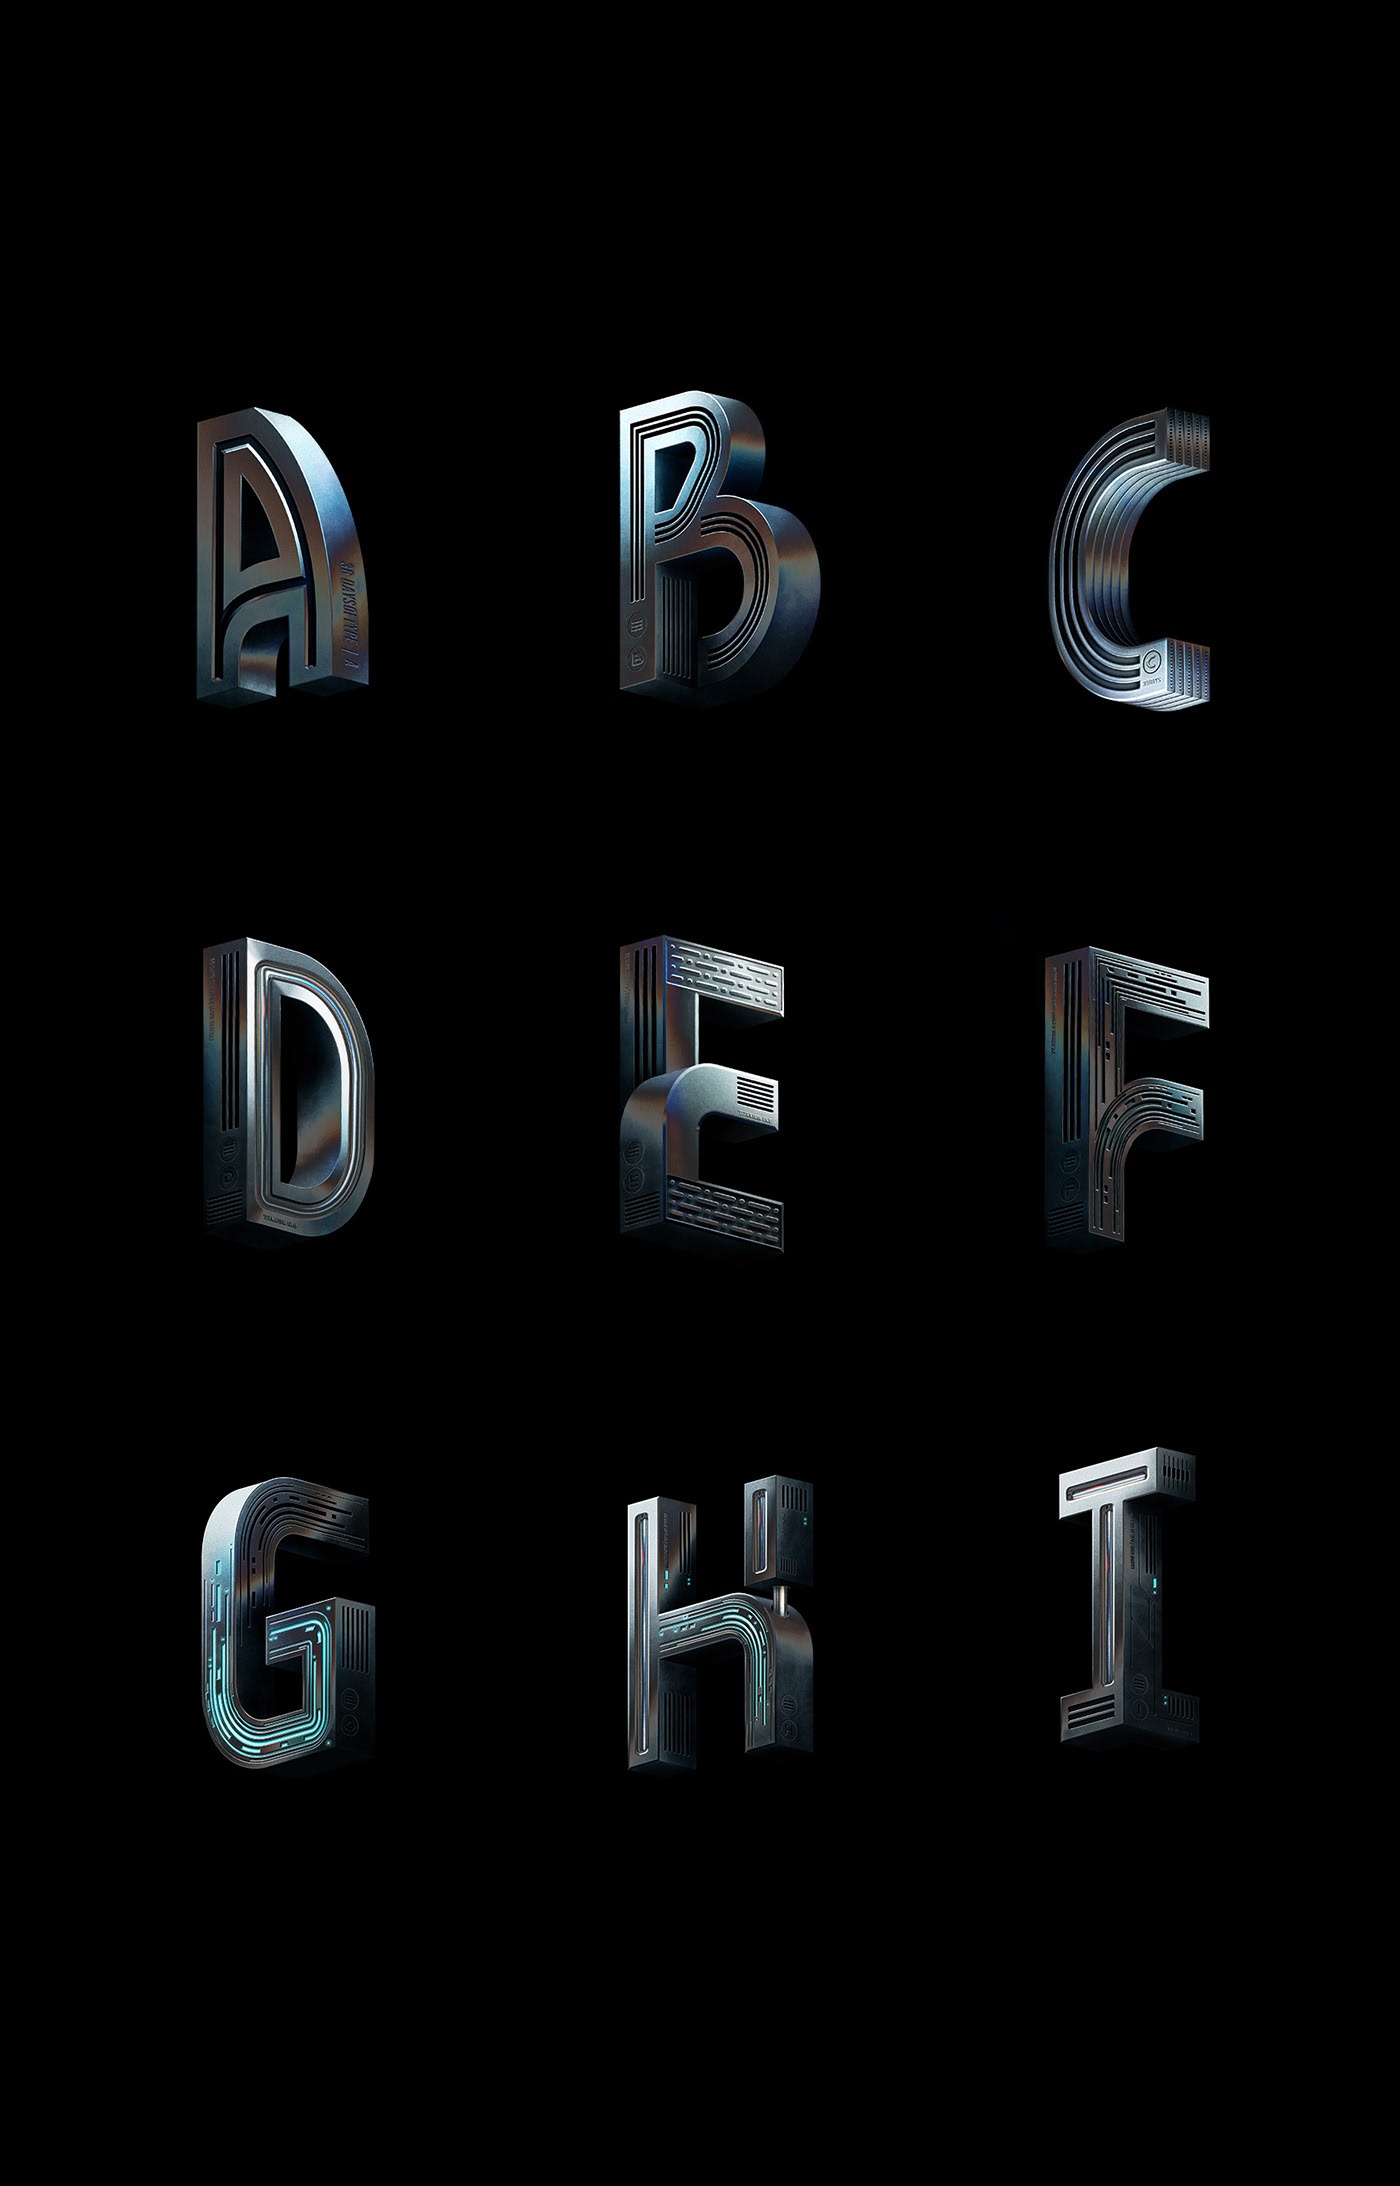 Andrew Footit时尚前卫的个性文字设计，创意字体设计作品。